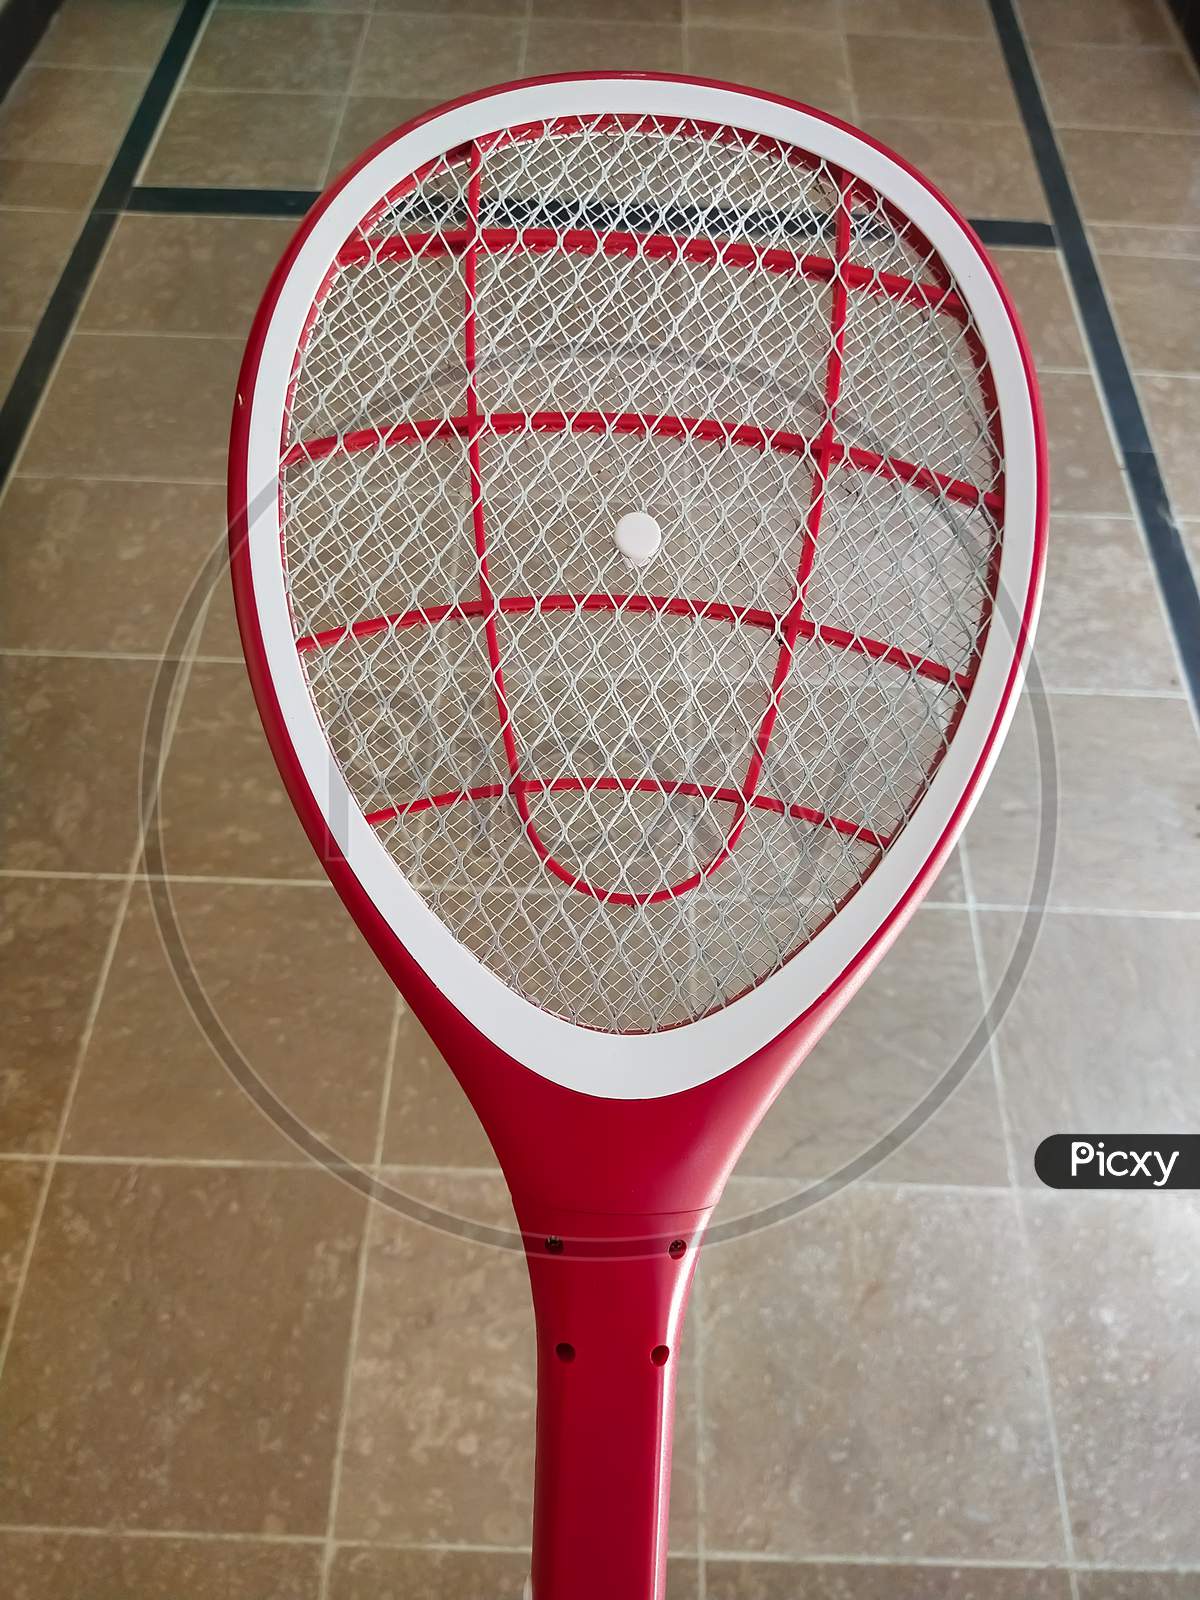 A mosquito killer device